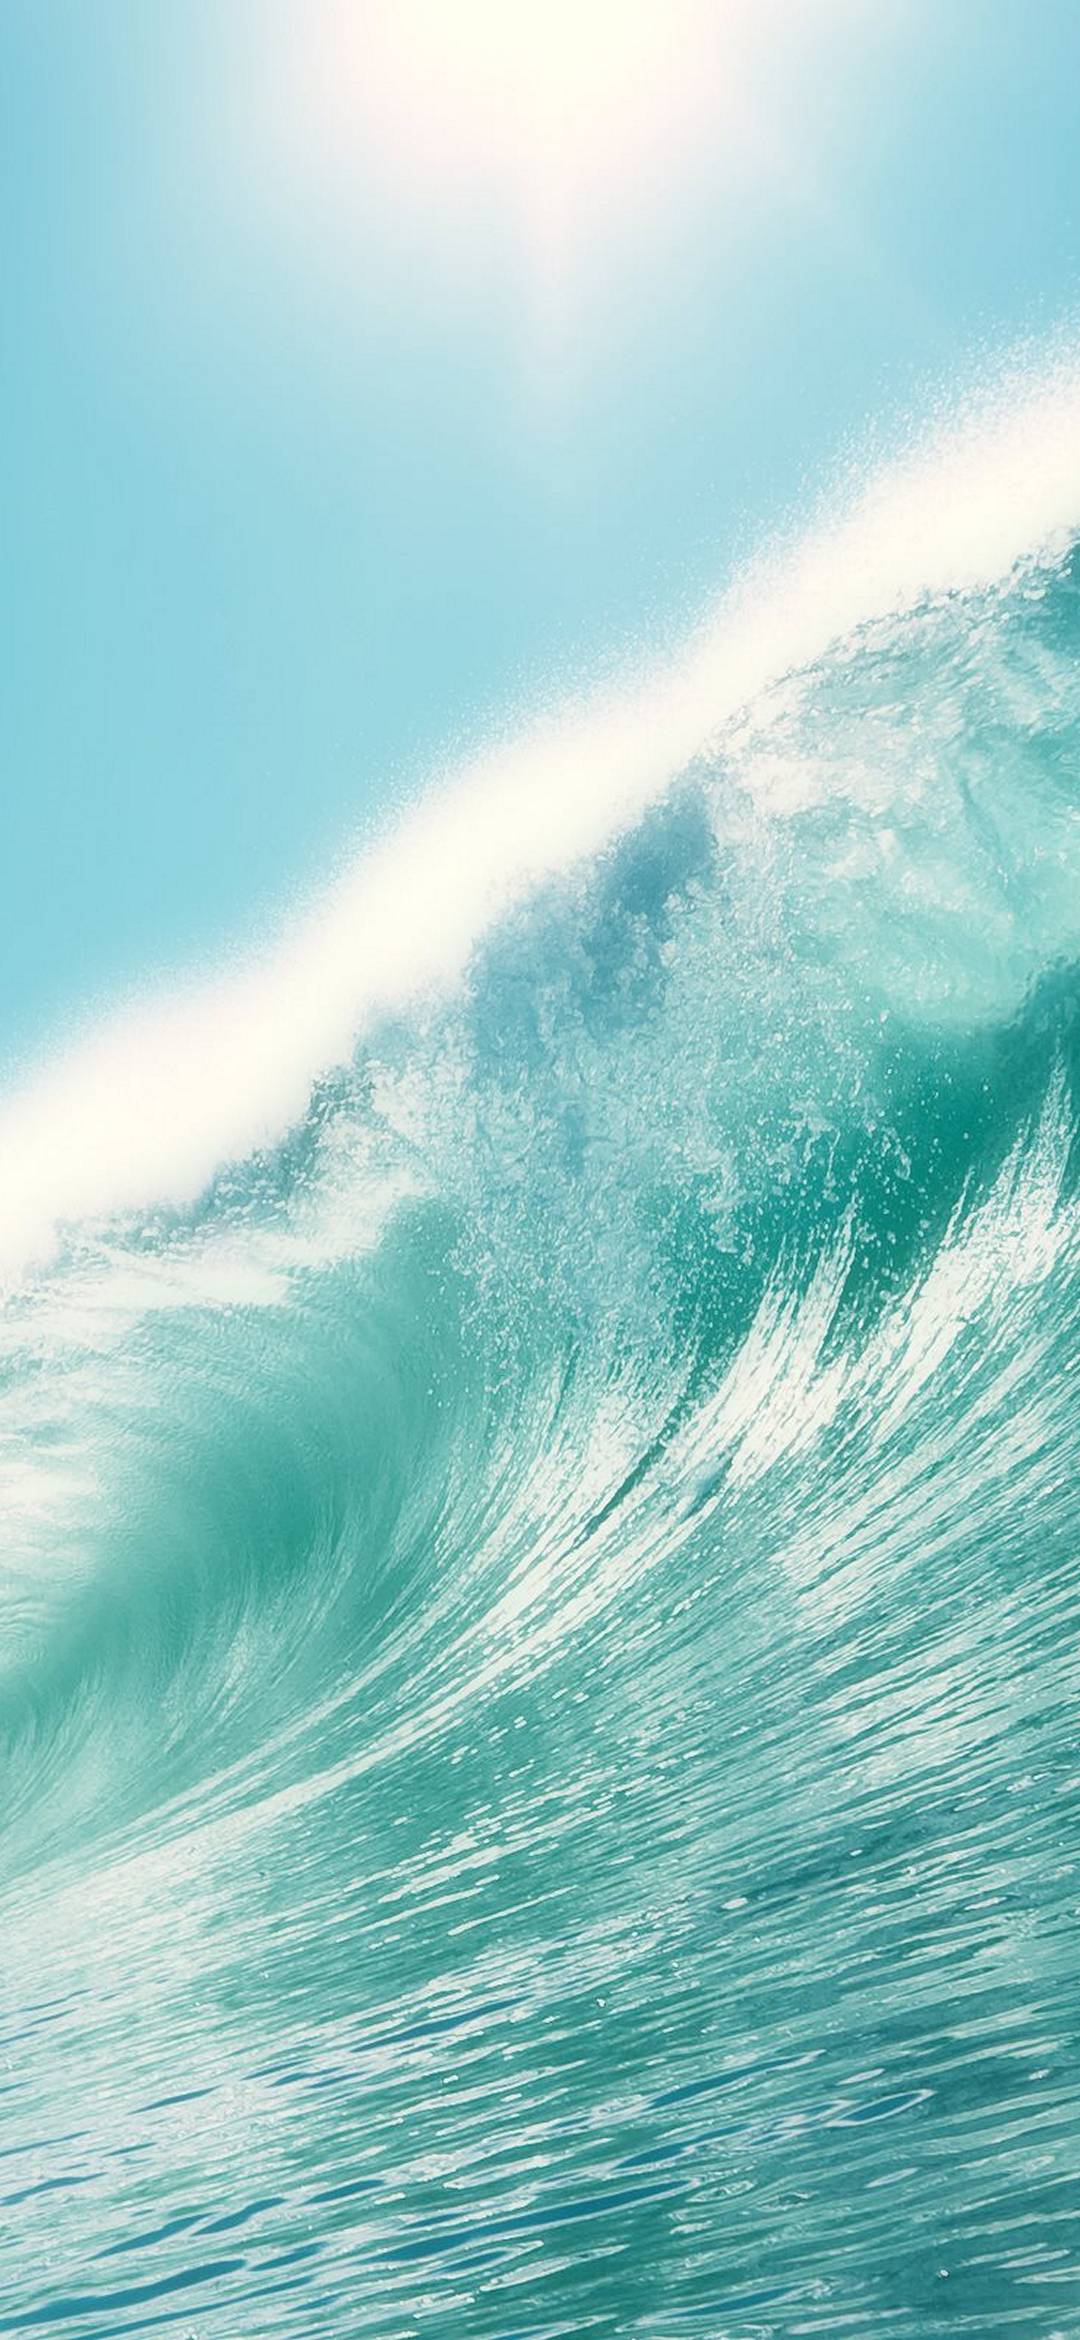 redmi mobile wallpaper,wave,wind wave,sky,water,ocean